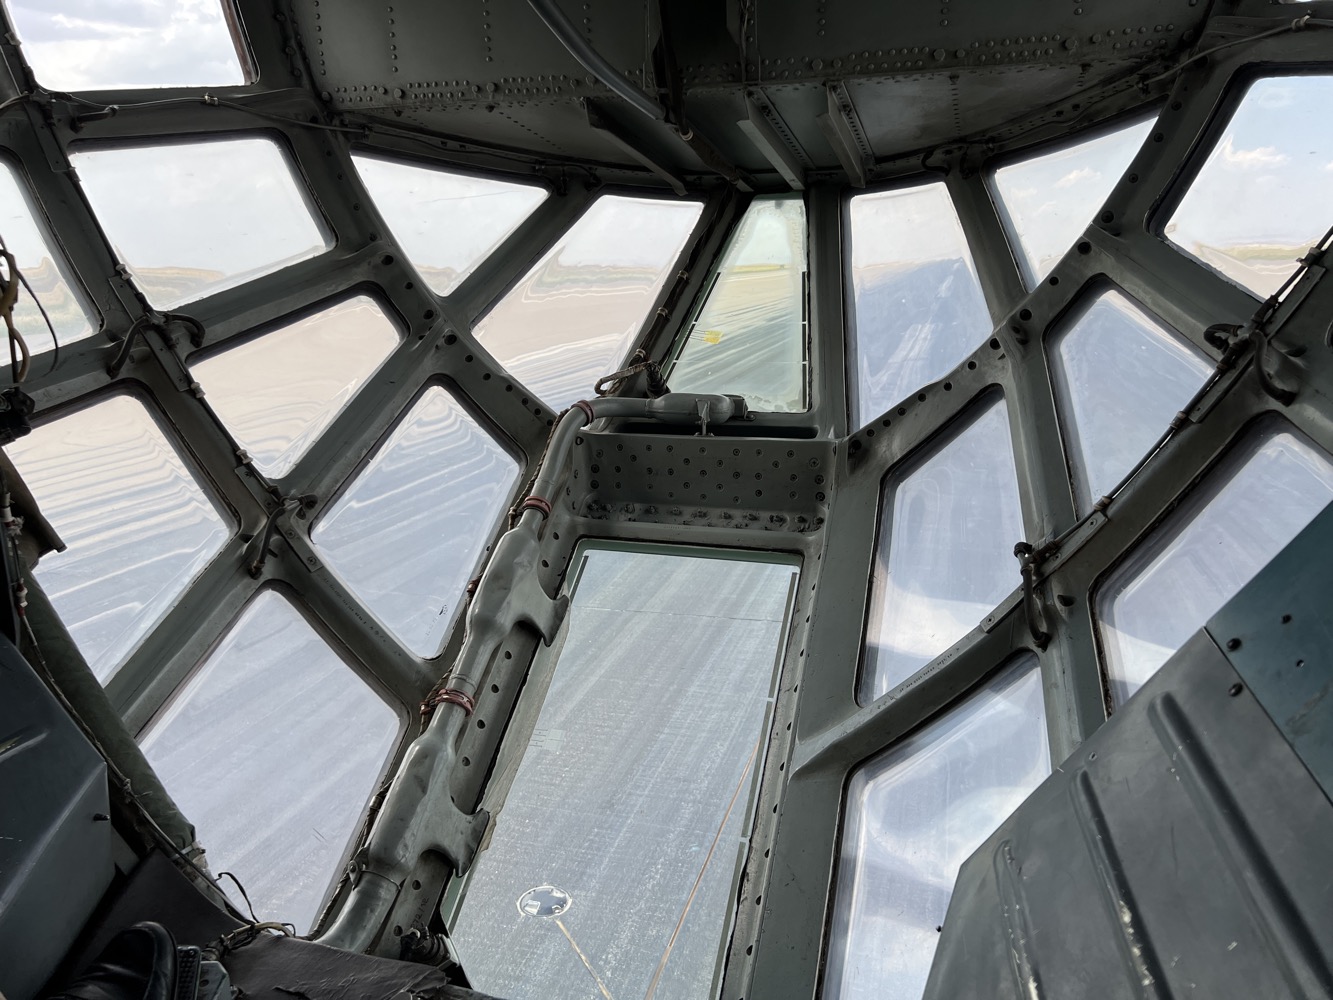 inside a cockpit of a plane